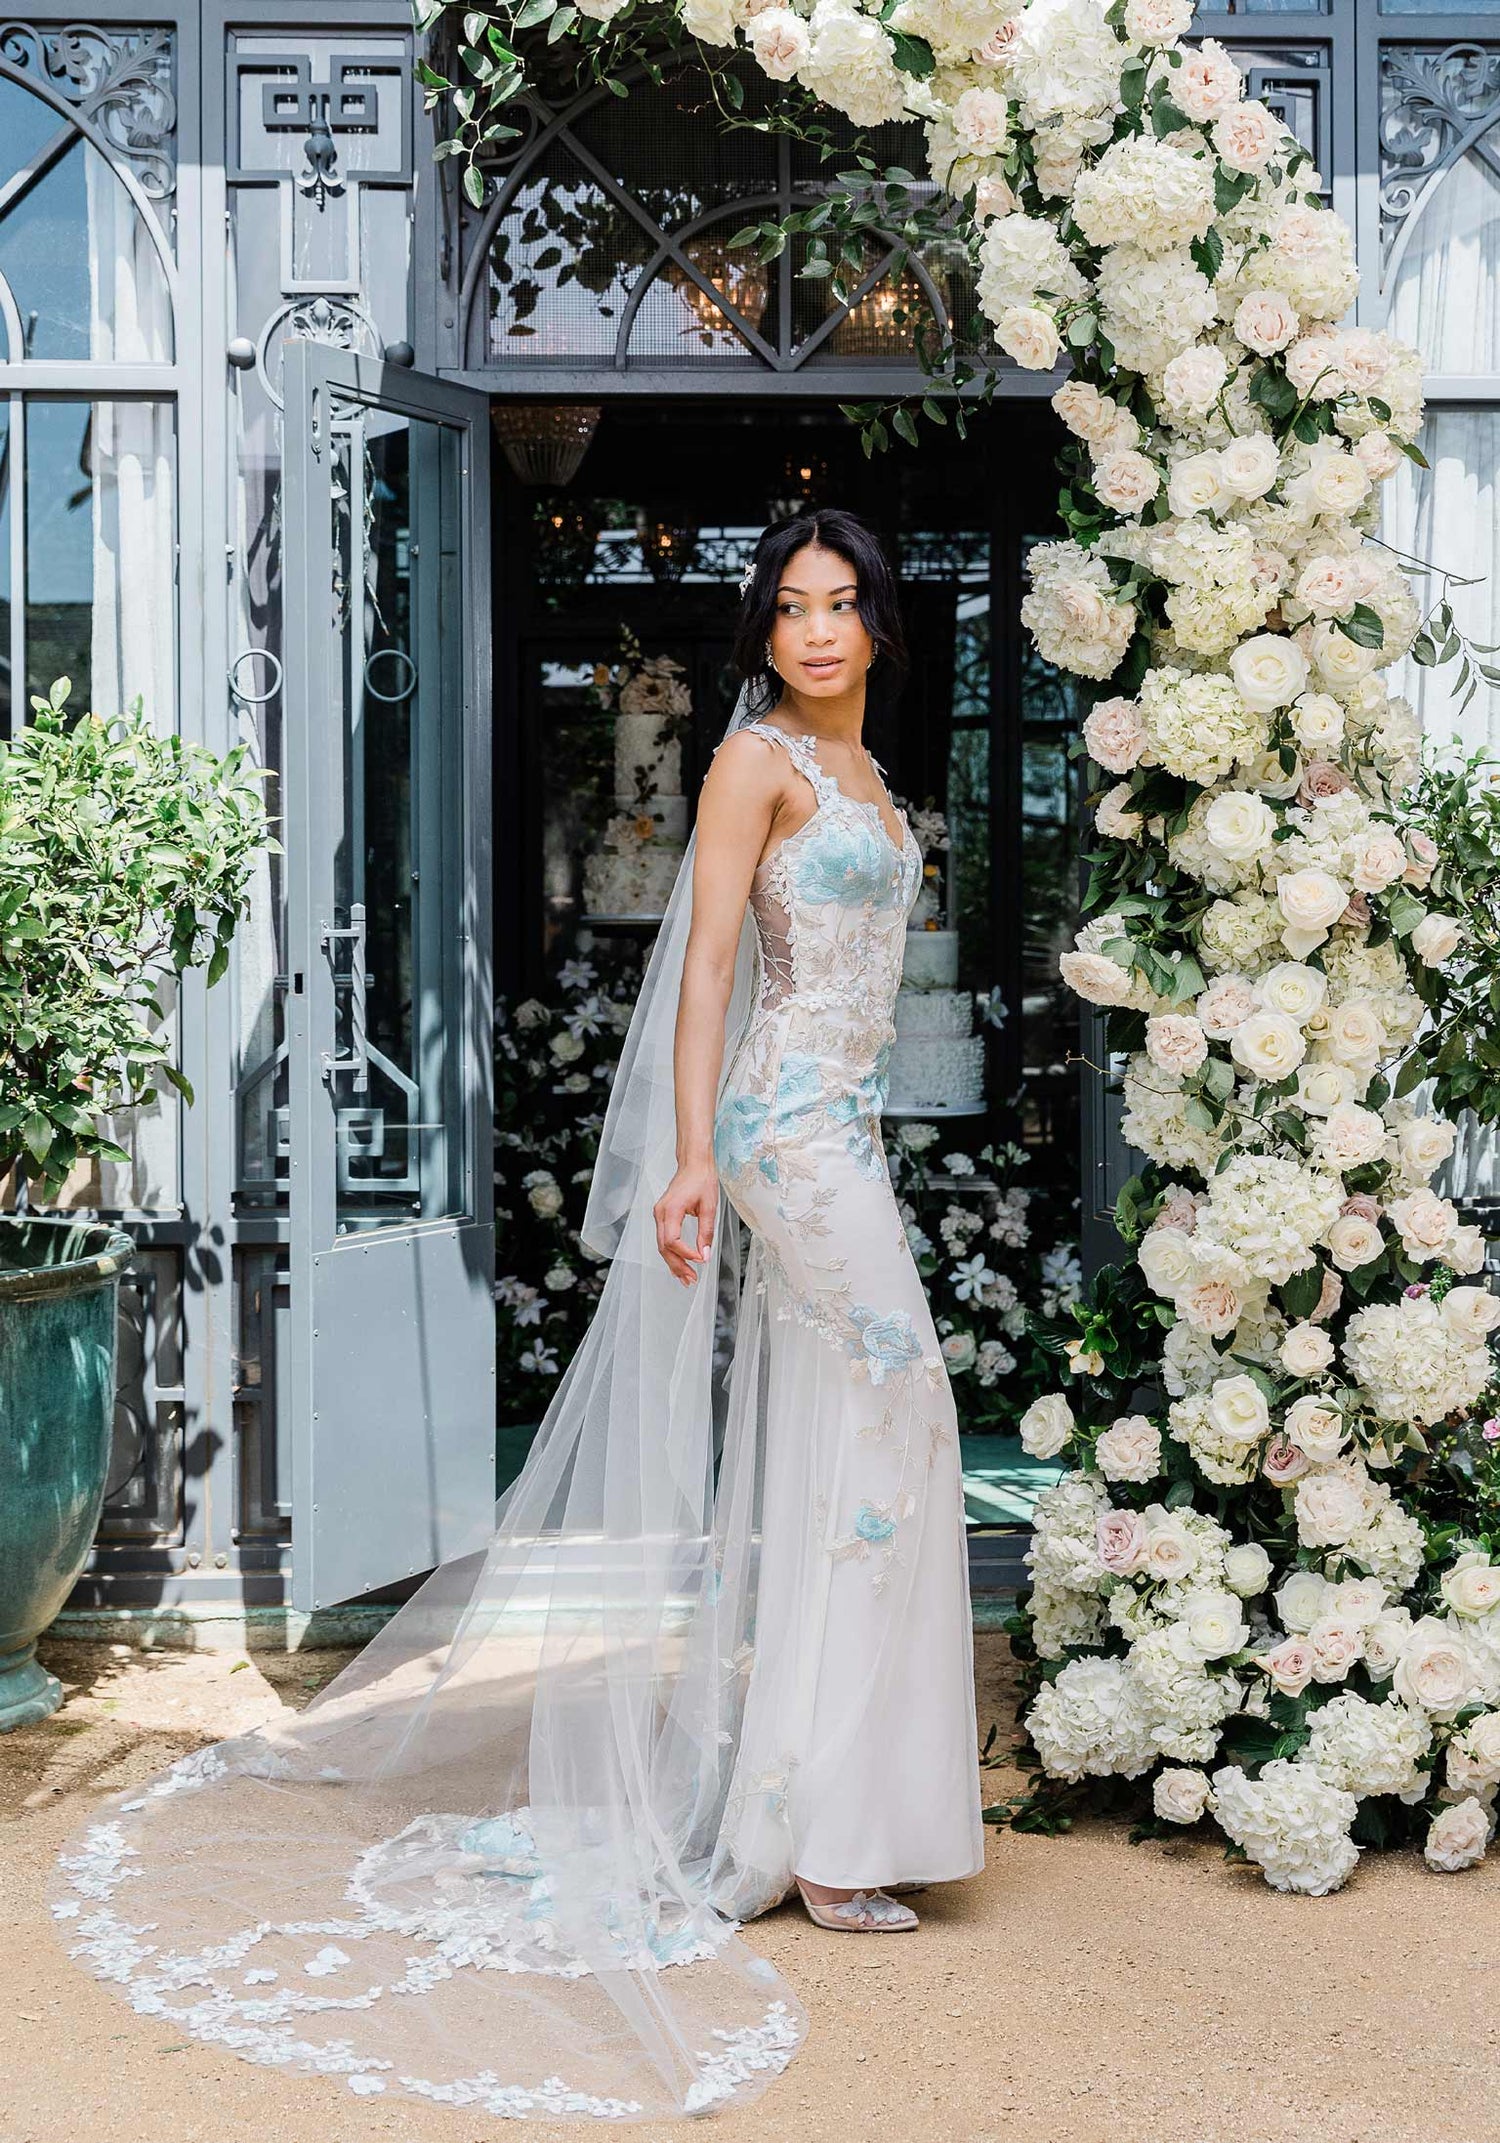 Model in Odessa Blue Wedding Dress in front of White Wedding Floral Arrangement